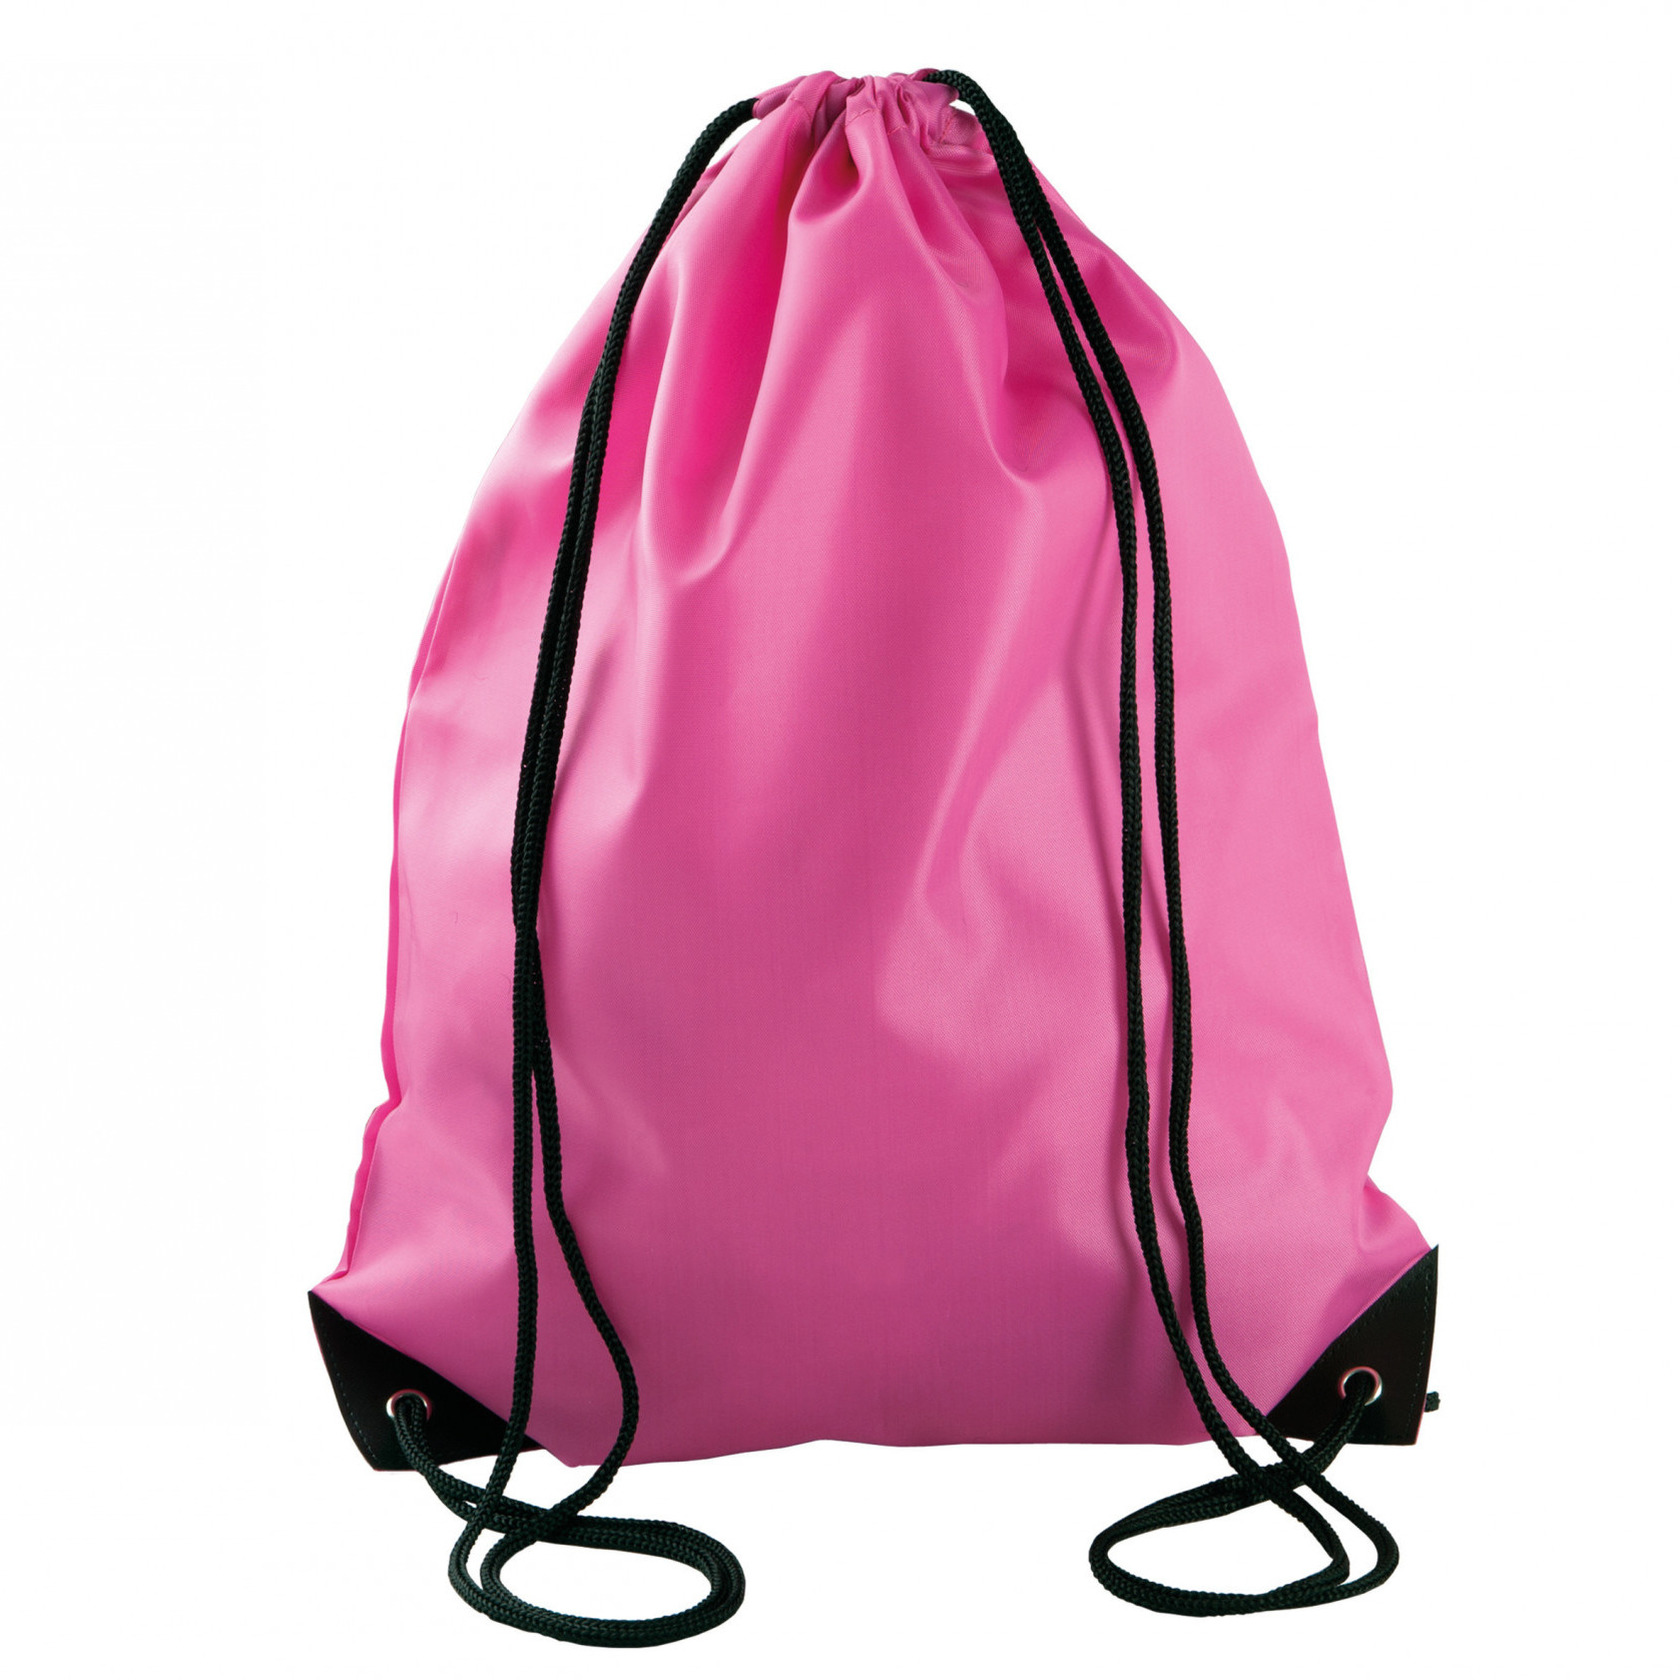 Sport gymtas-draagtas fuchsia roze met rijgkoord 34 x 44 cm van polyester